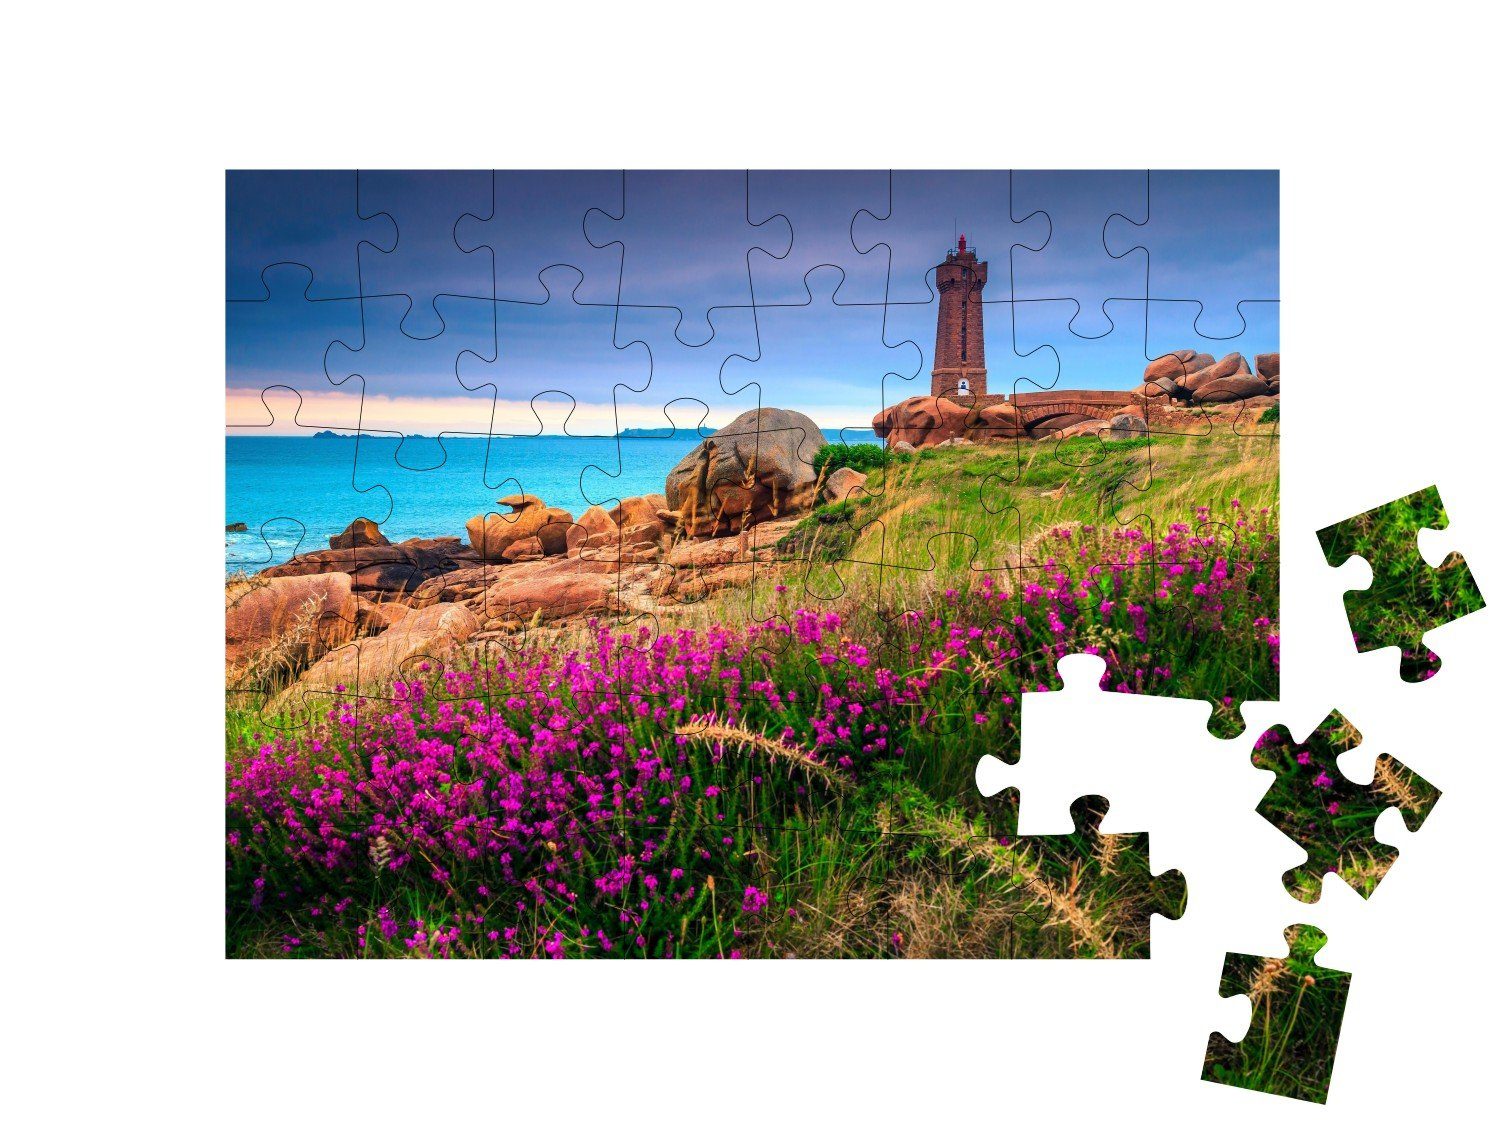 Puzzle puzzleYOU Leuchtturm 48 Bretagne Frankreich, Sonnenuntergang, puzzleYOU-Kollektionen Puzzleteile, im